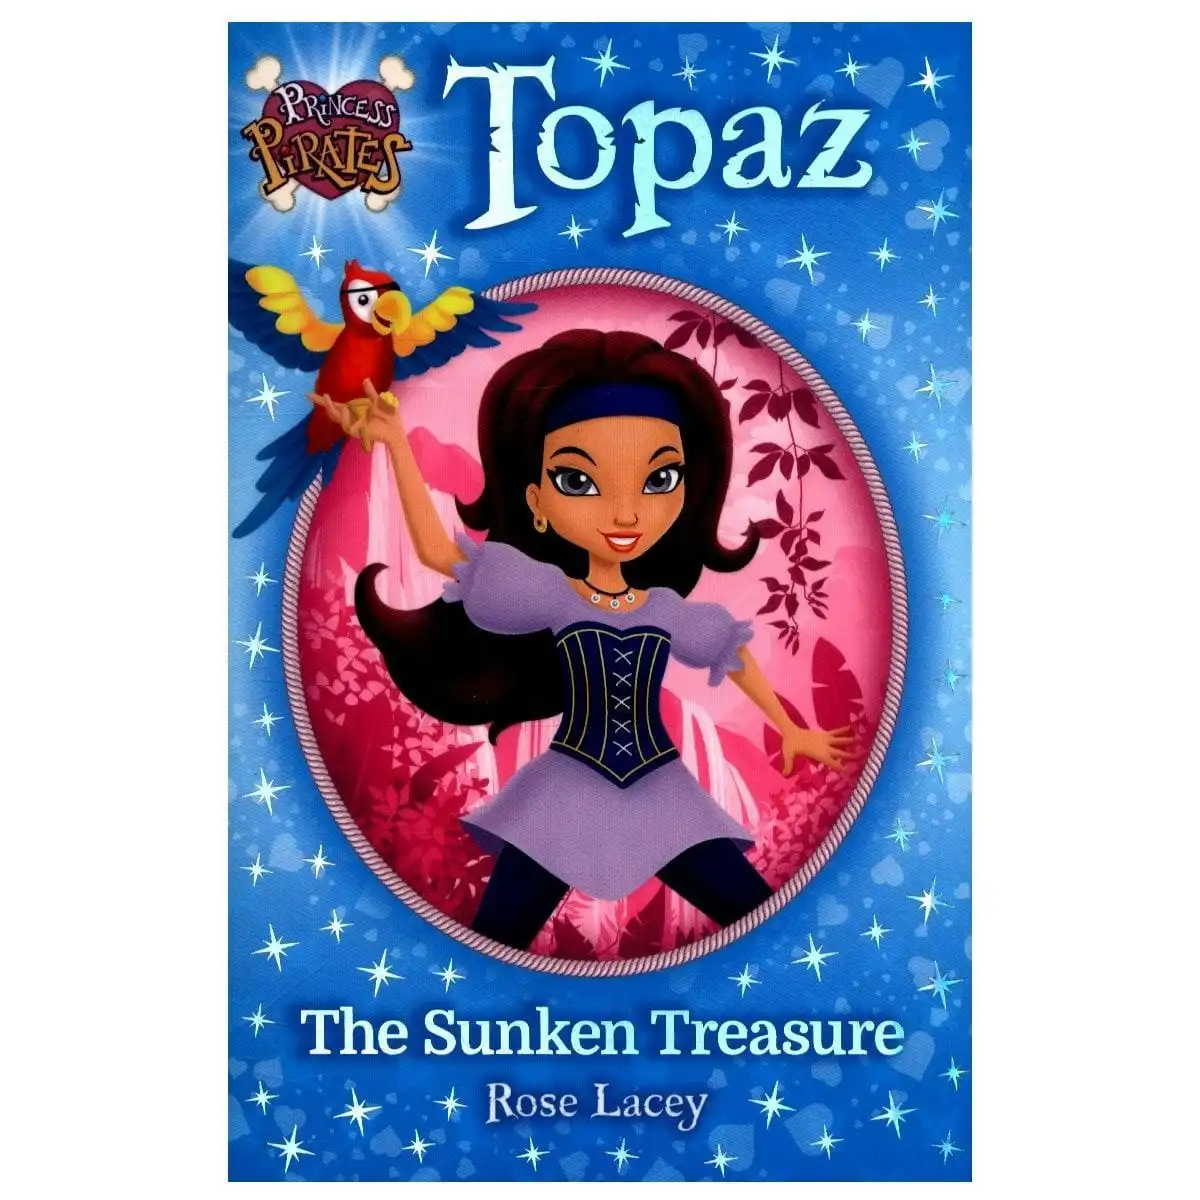 Topaz: The Sunken Treasure